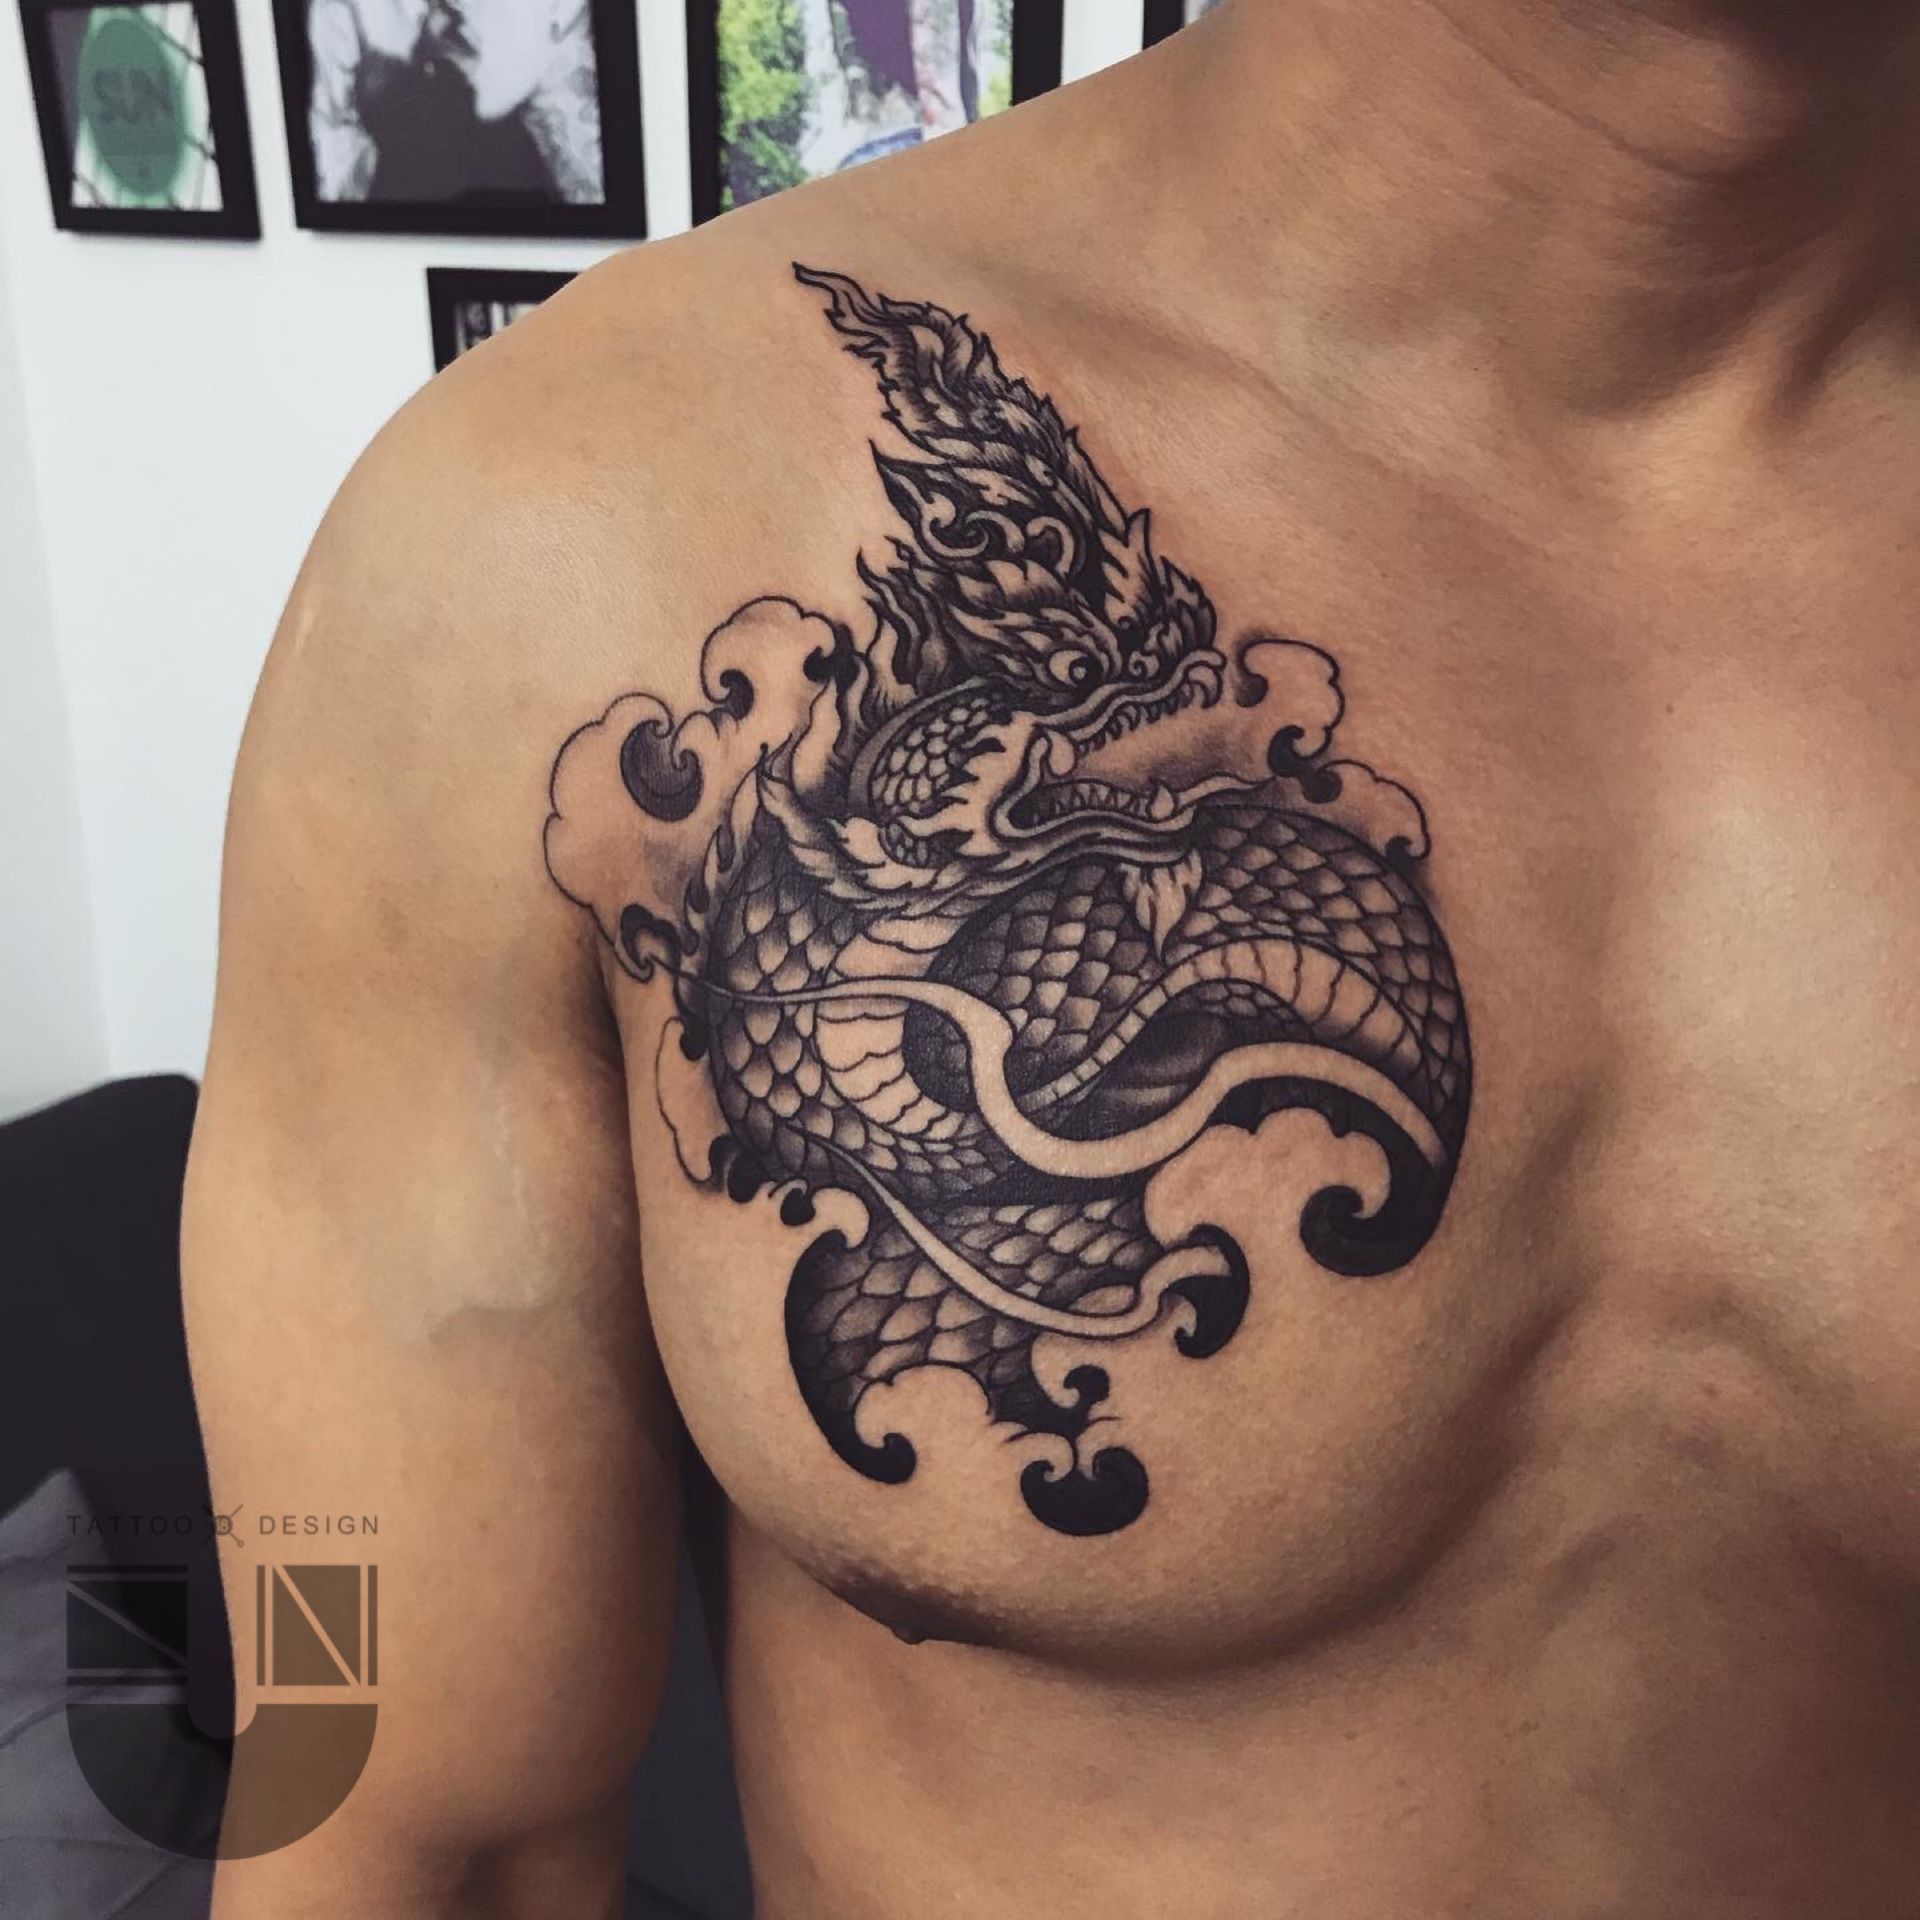 Mo Naga strives to save the Naga tradition through his tattoo art